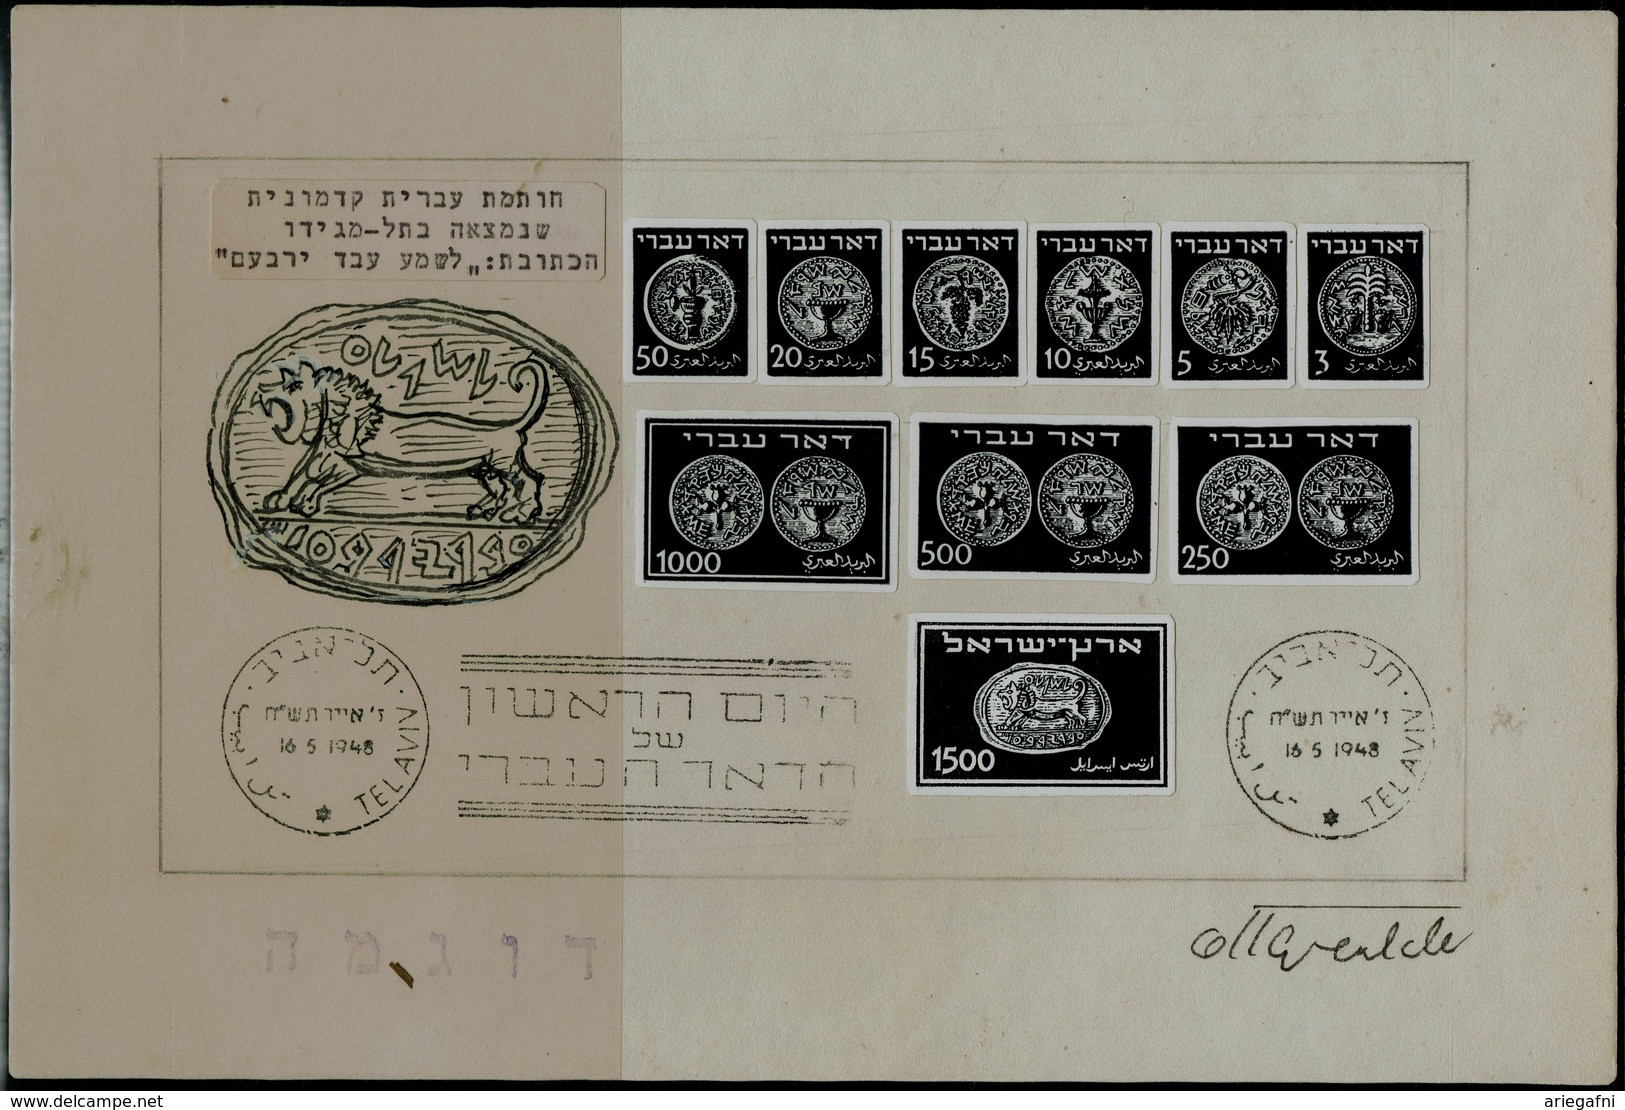 ISRAEL 1948 PROOF OF FDC DOAR IVRI WITH ADDITIONAL STAMP EREZ ISRAEL1500pr WITH SIGNATURE BY ARTIST OTTO VALISH WITH CER - Non Dentellati, Prove E Varietà